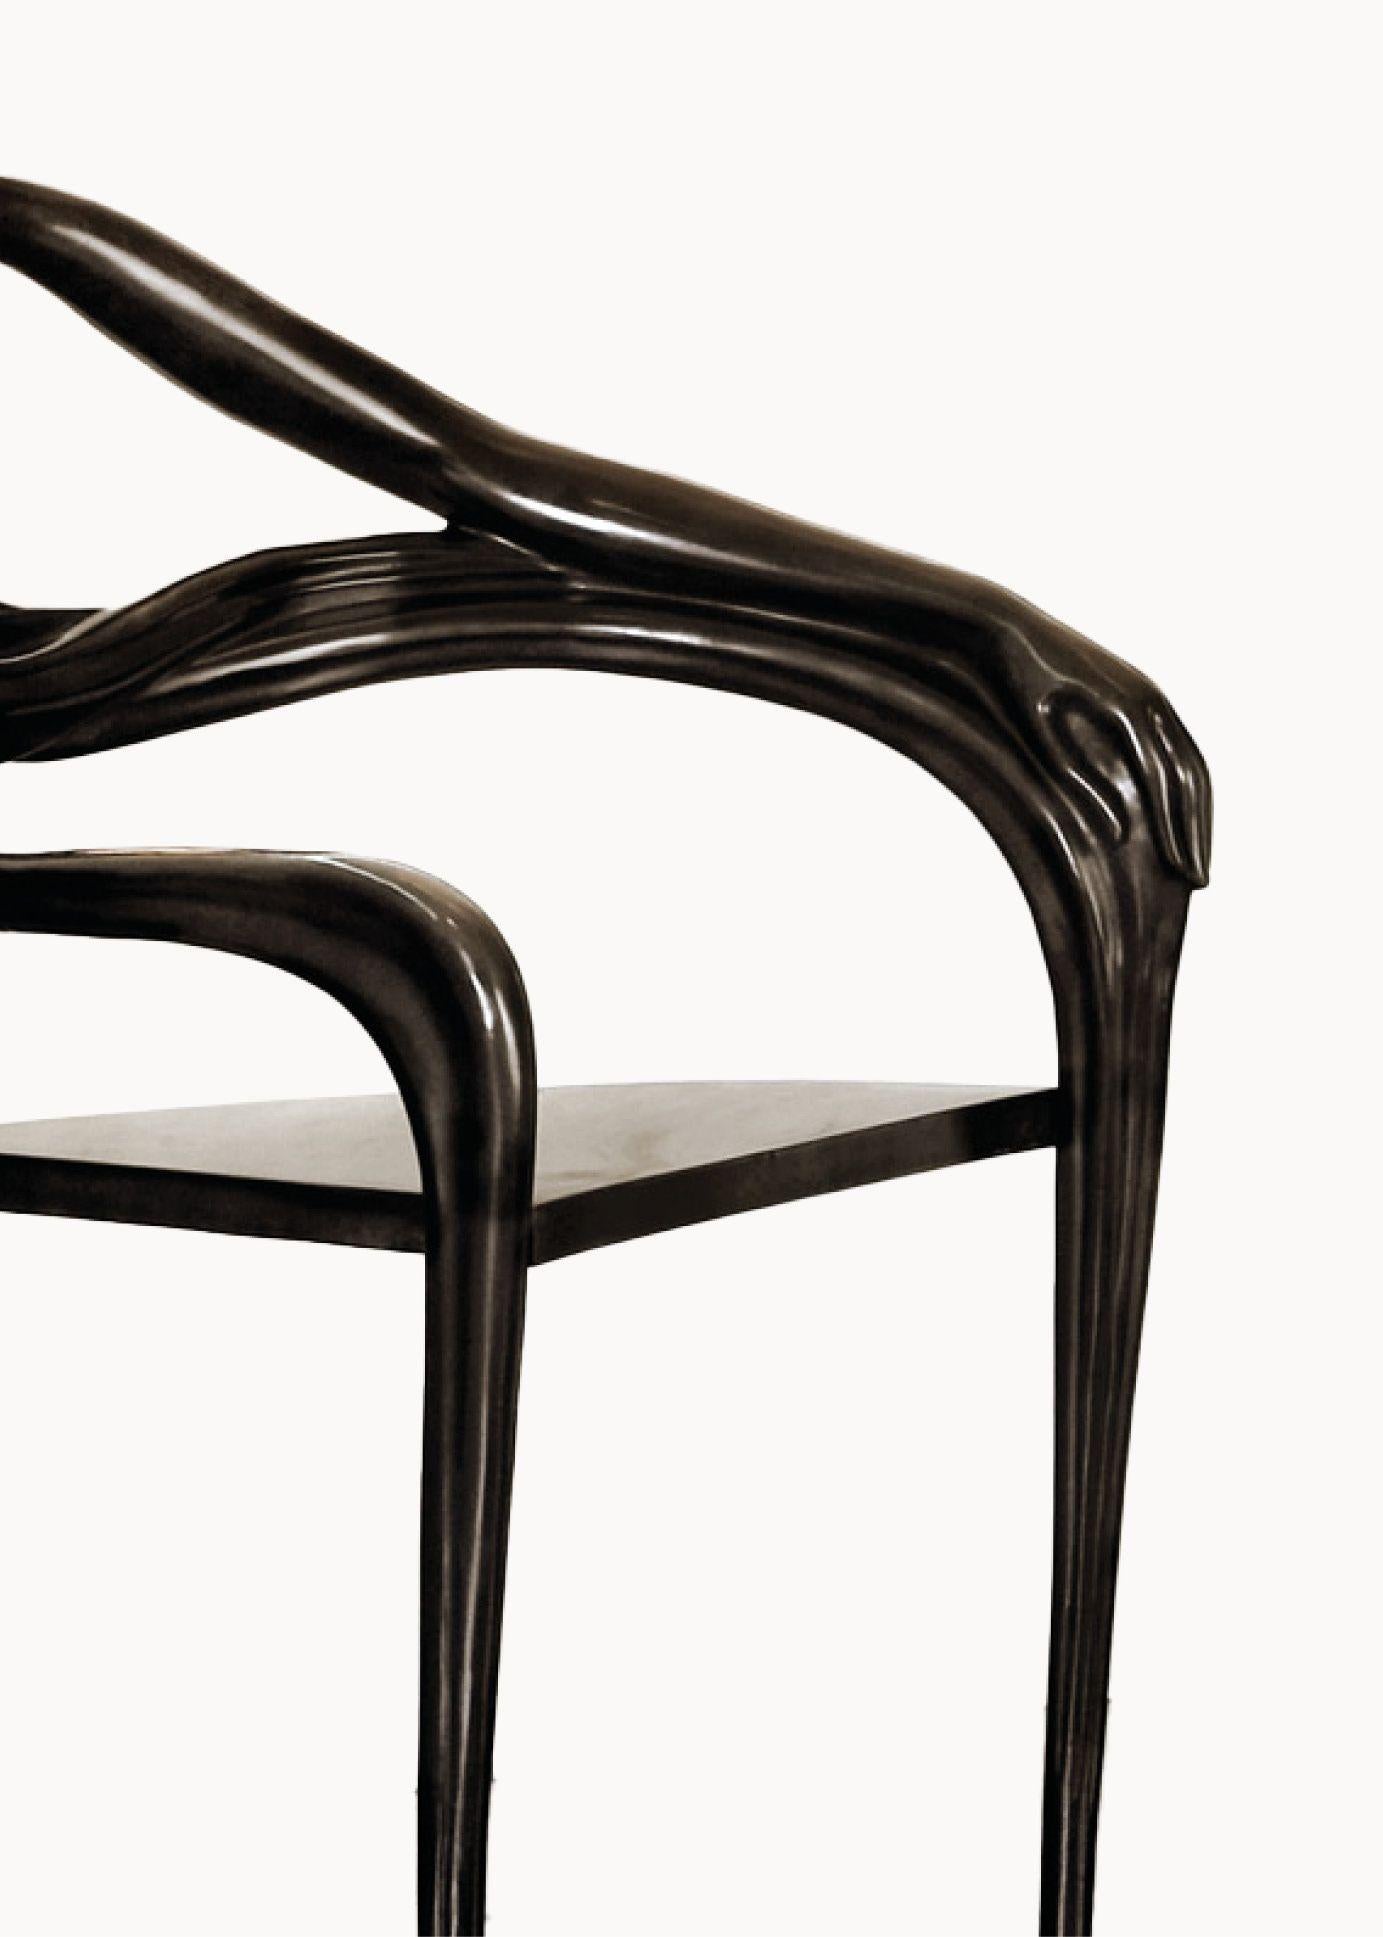 Salvador Dali Surrealist Leda Armchair Sculpture Black Label Limited Edition For Sale 2